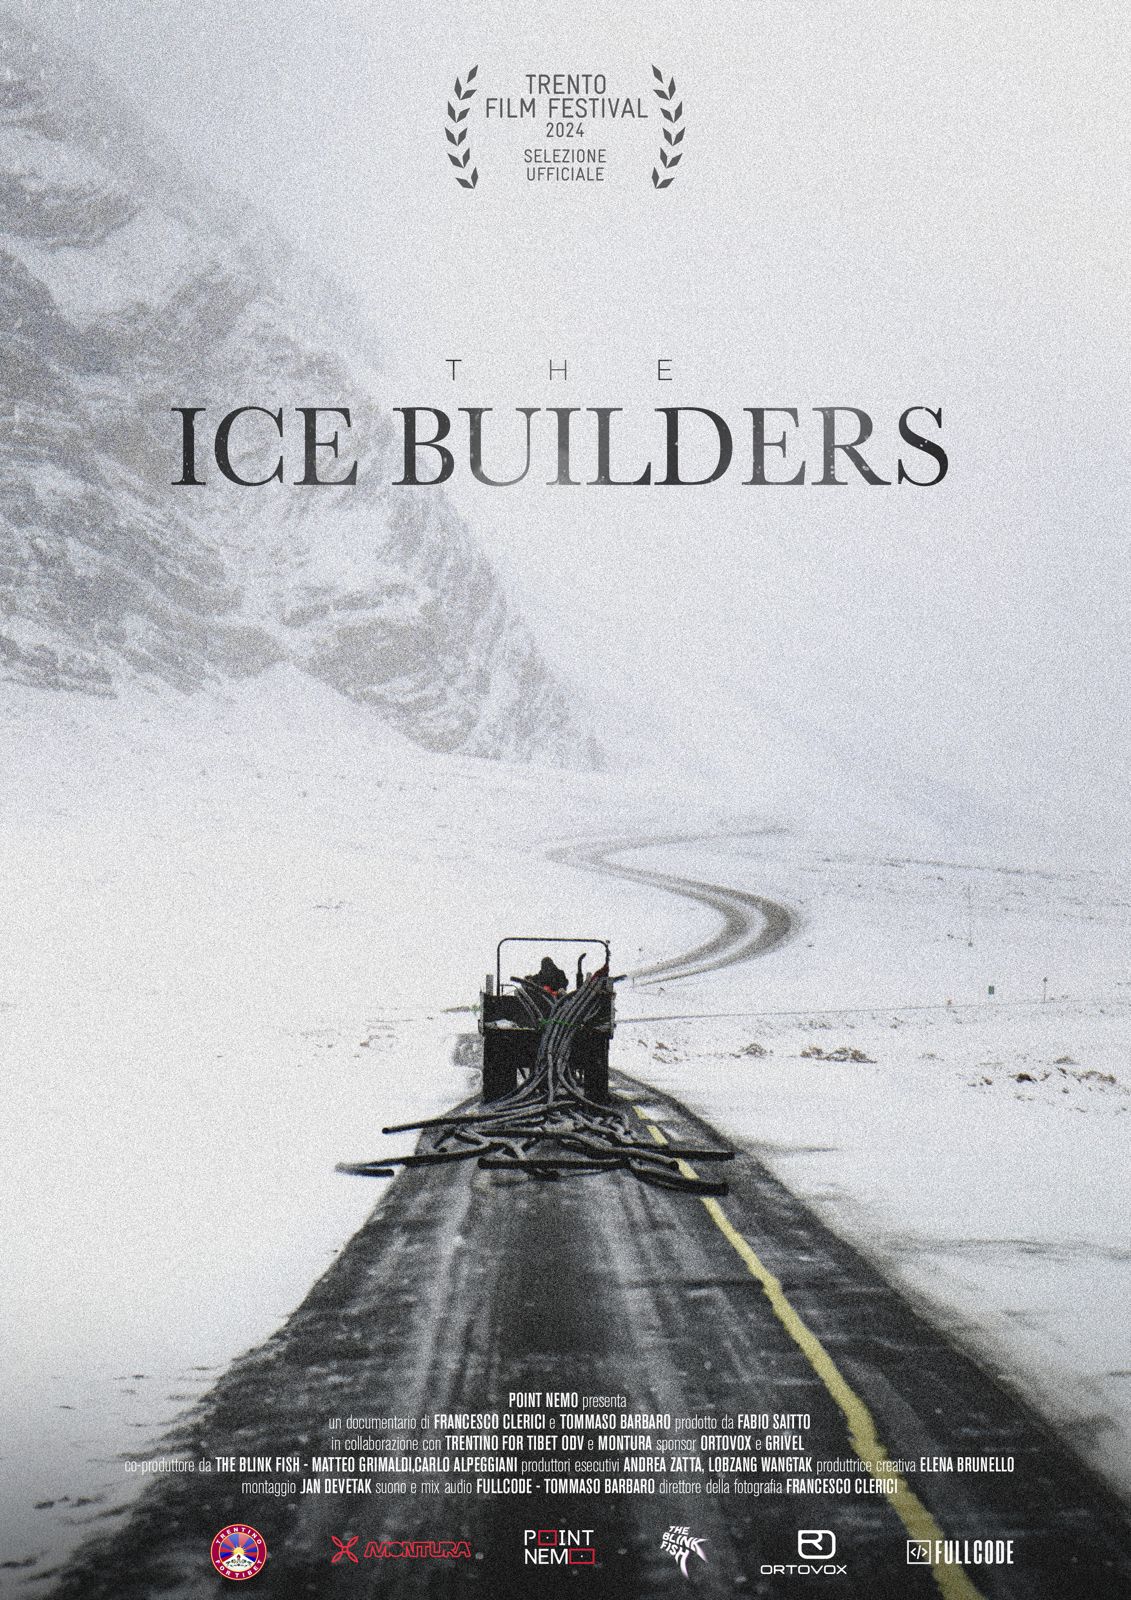 The ice builders